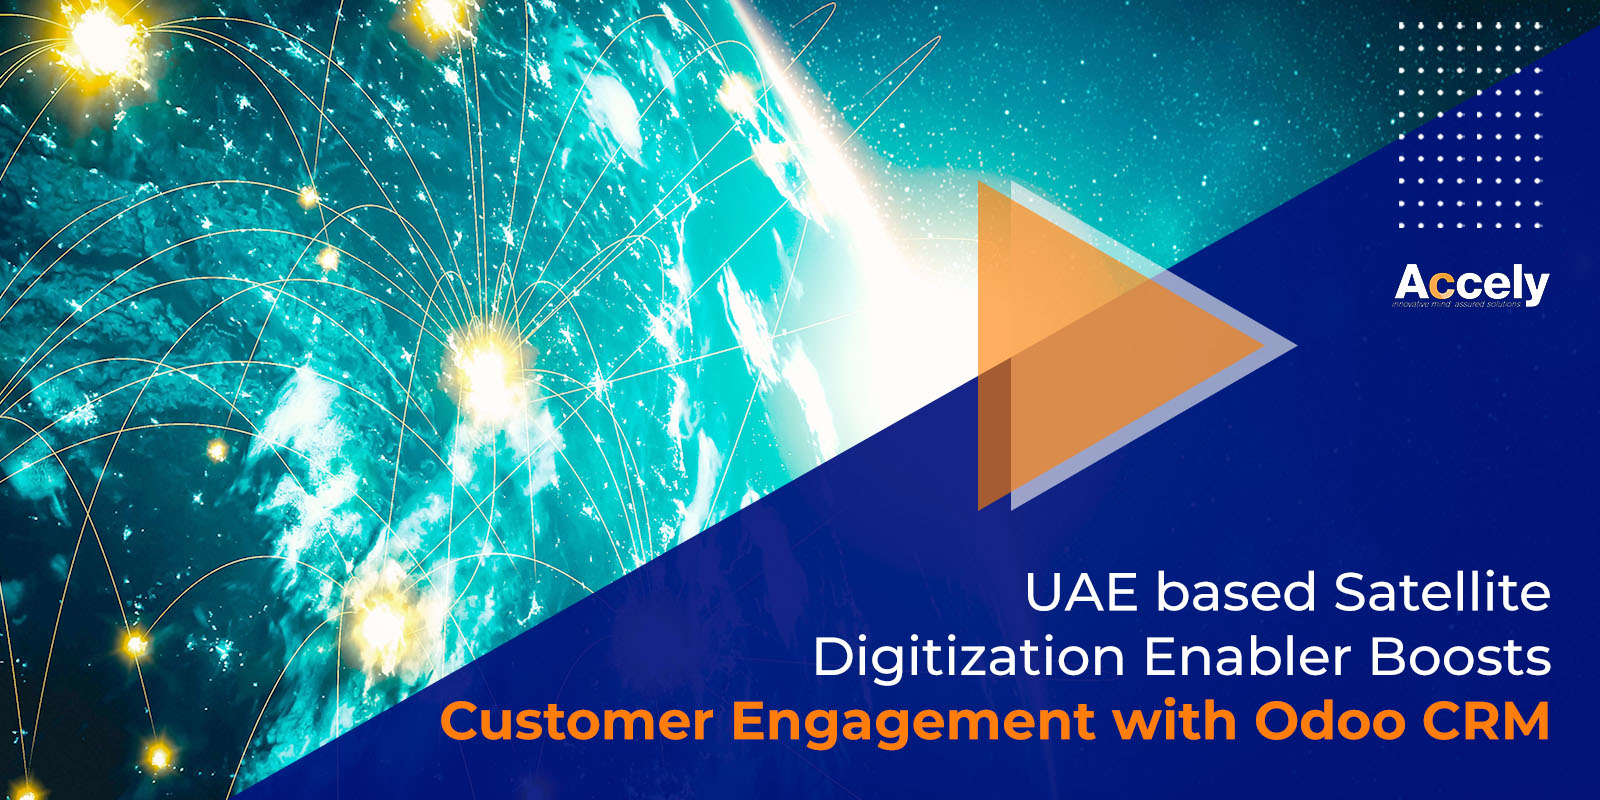 UAE based Satellite Digitization Enabler Boosts Customer Engagement with Odoo CRM